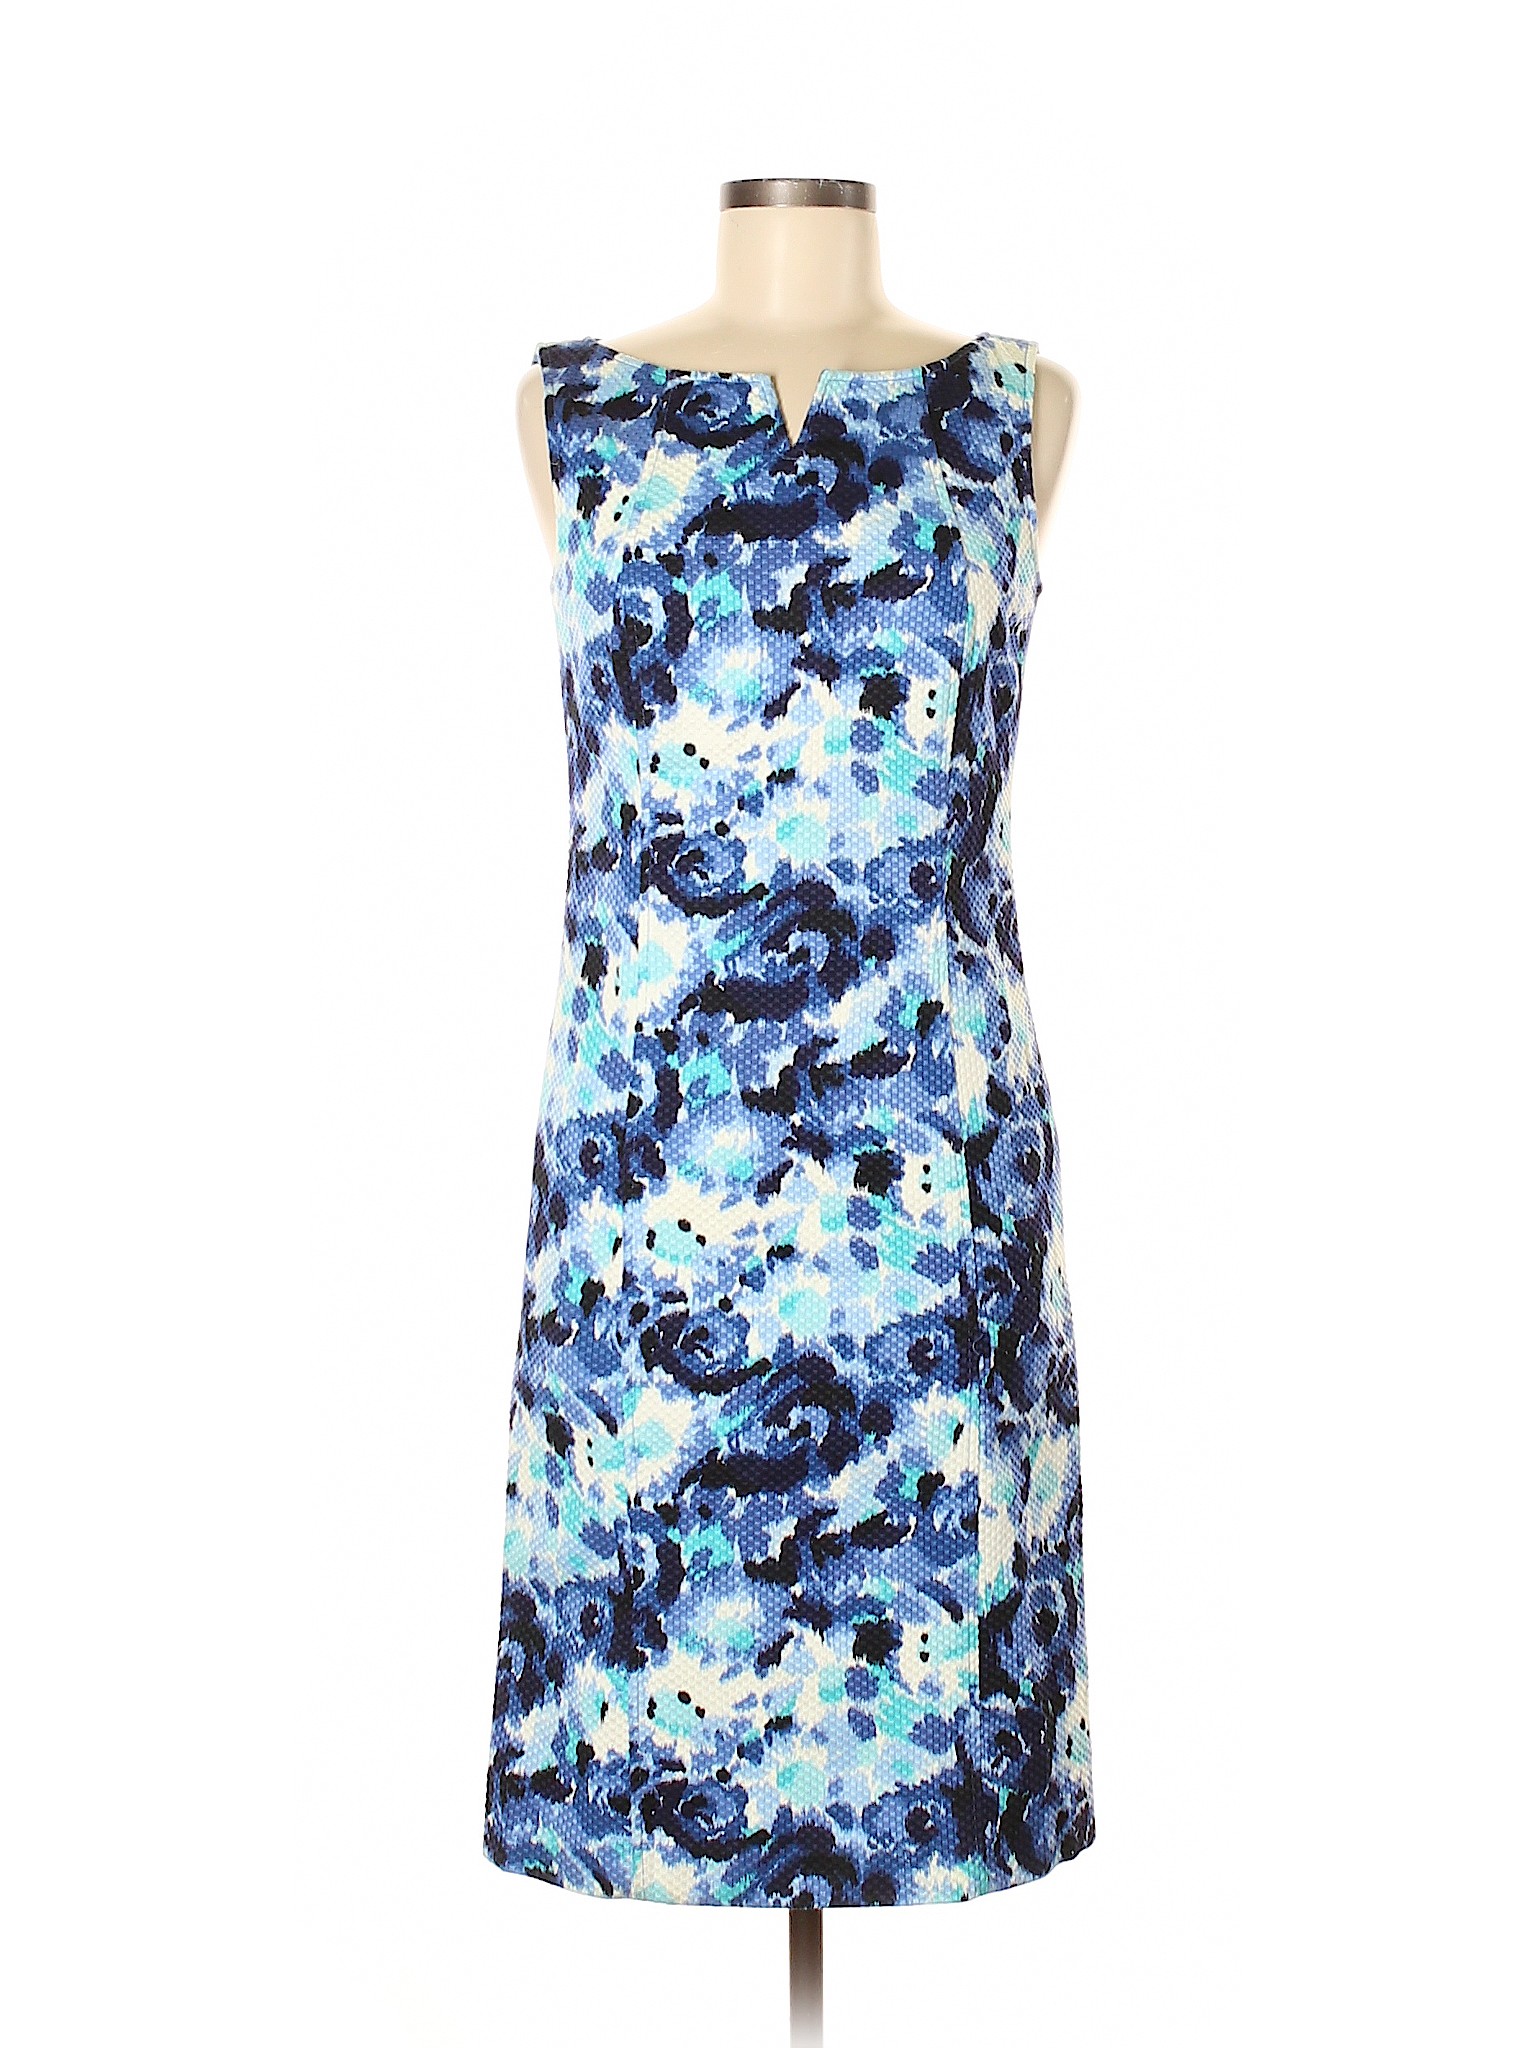 Talbots Outlet Floral Blue Casual Dress Size 6 - 19% off | thredUP